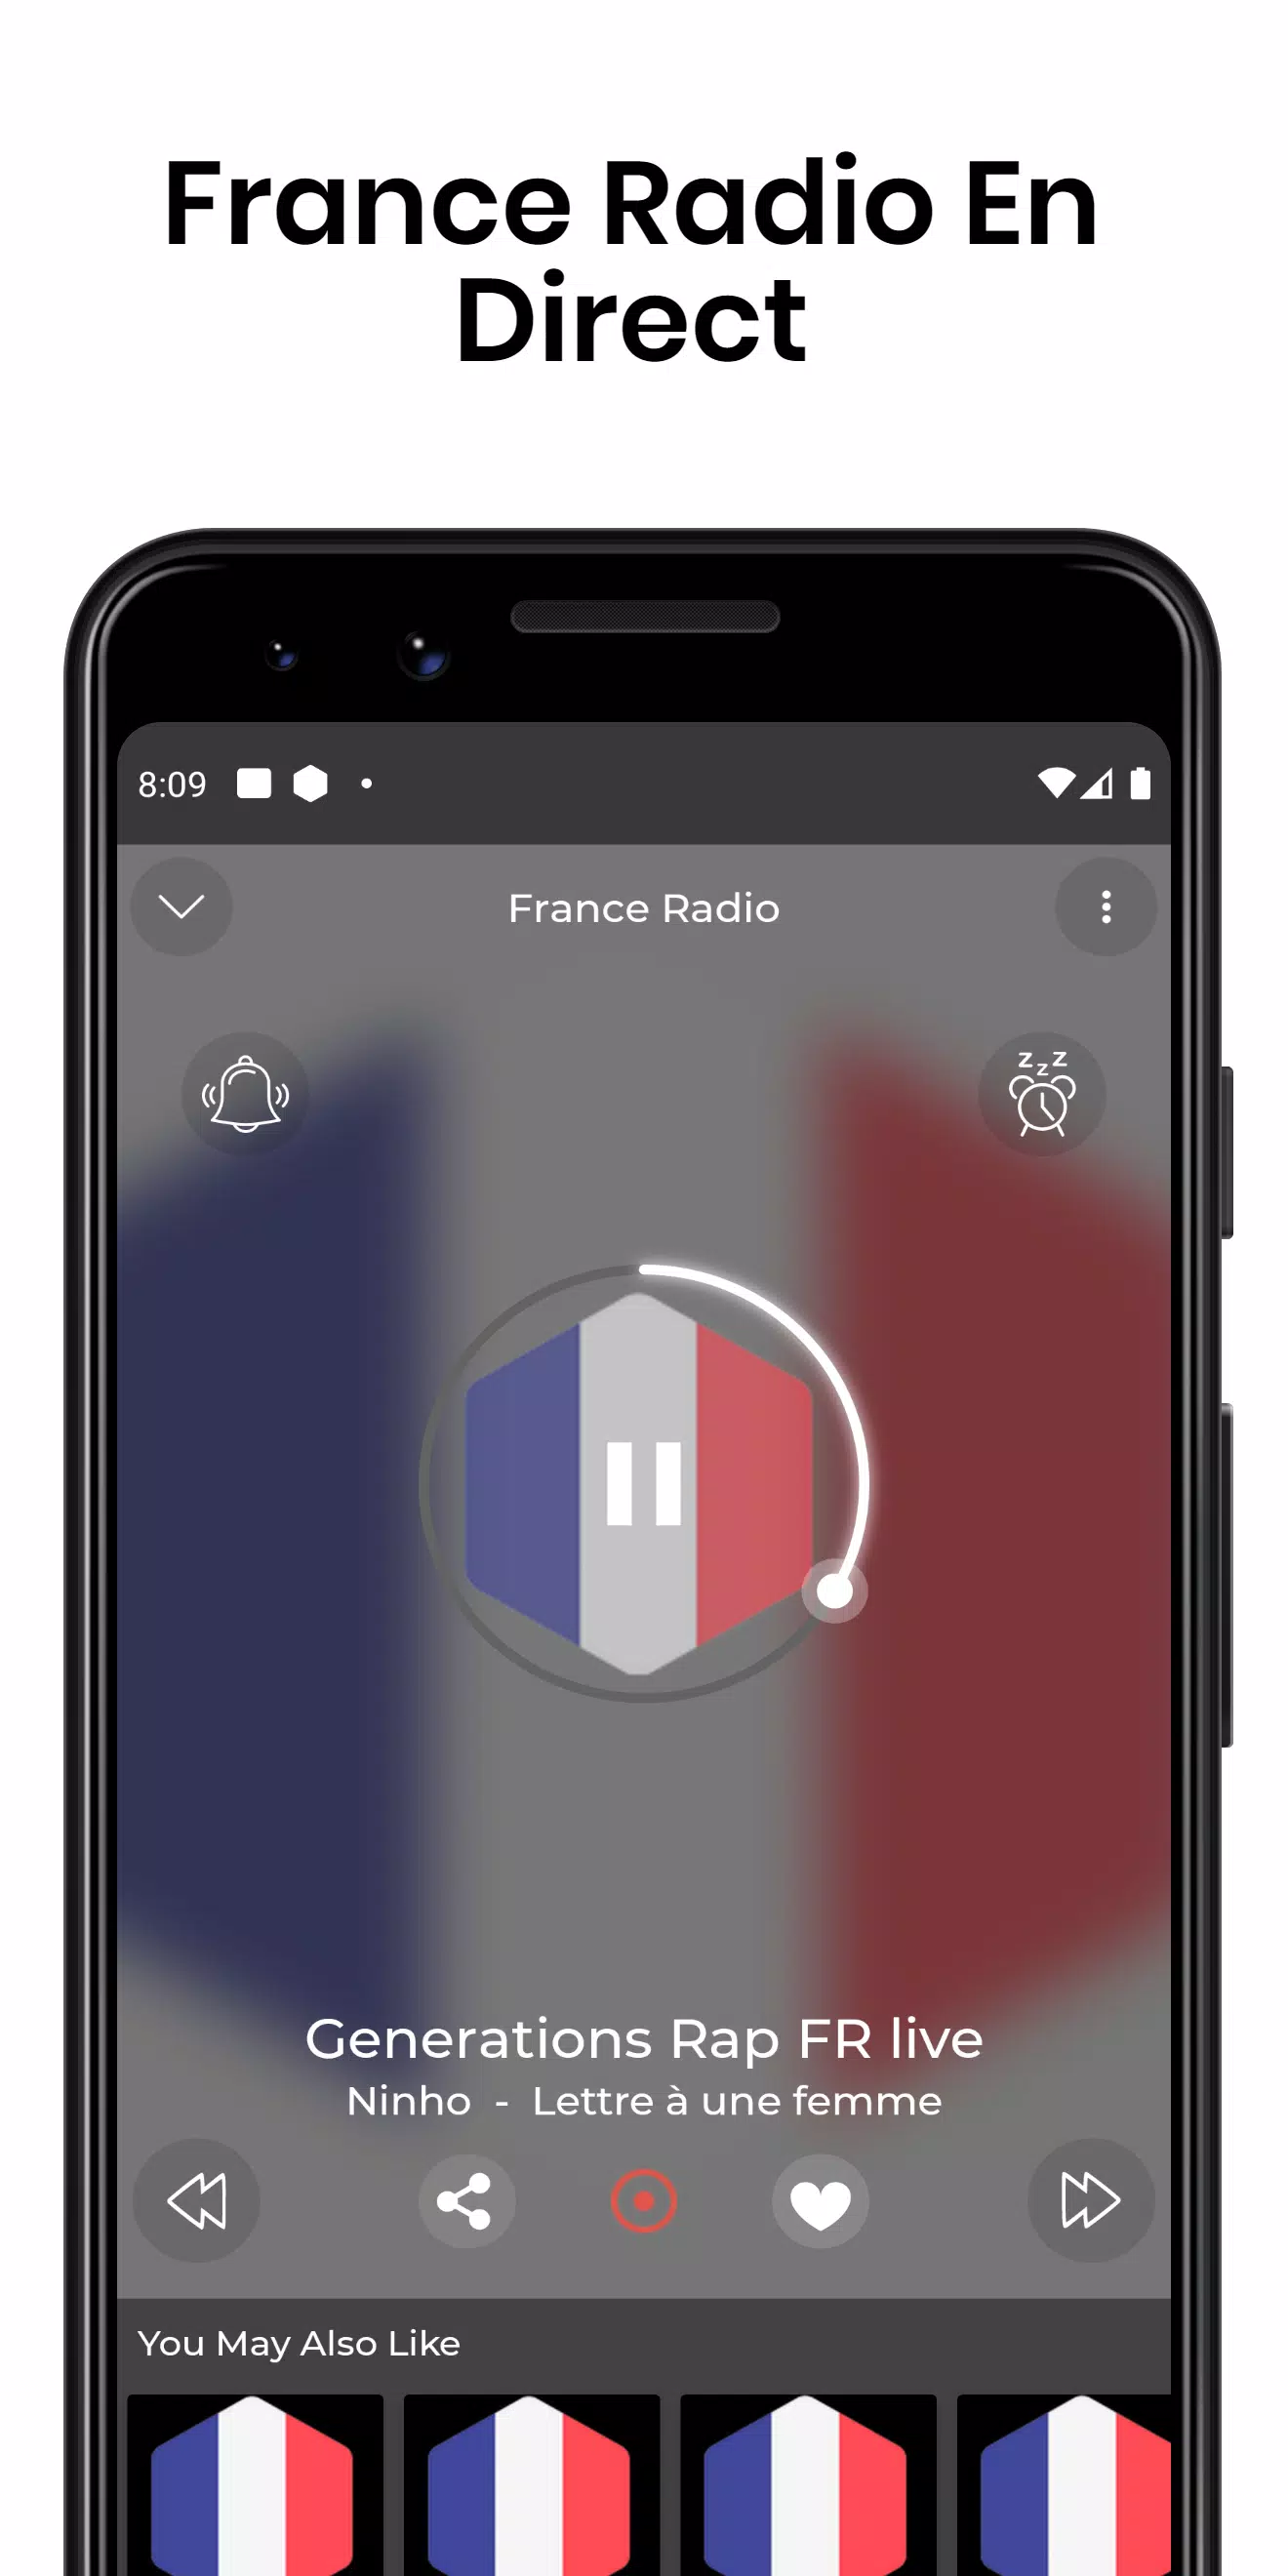 Fun radio France Radio En ligne for Android - APK Download